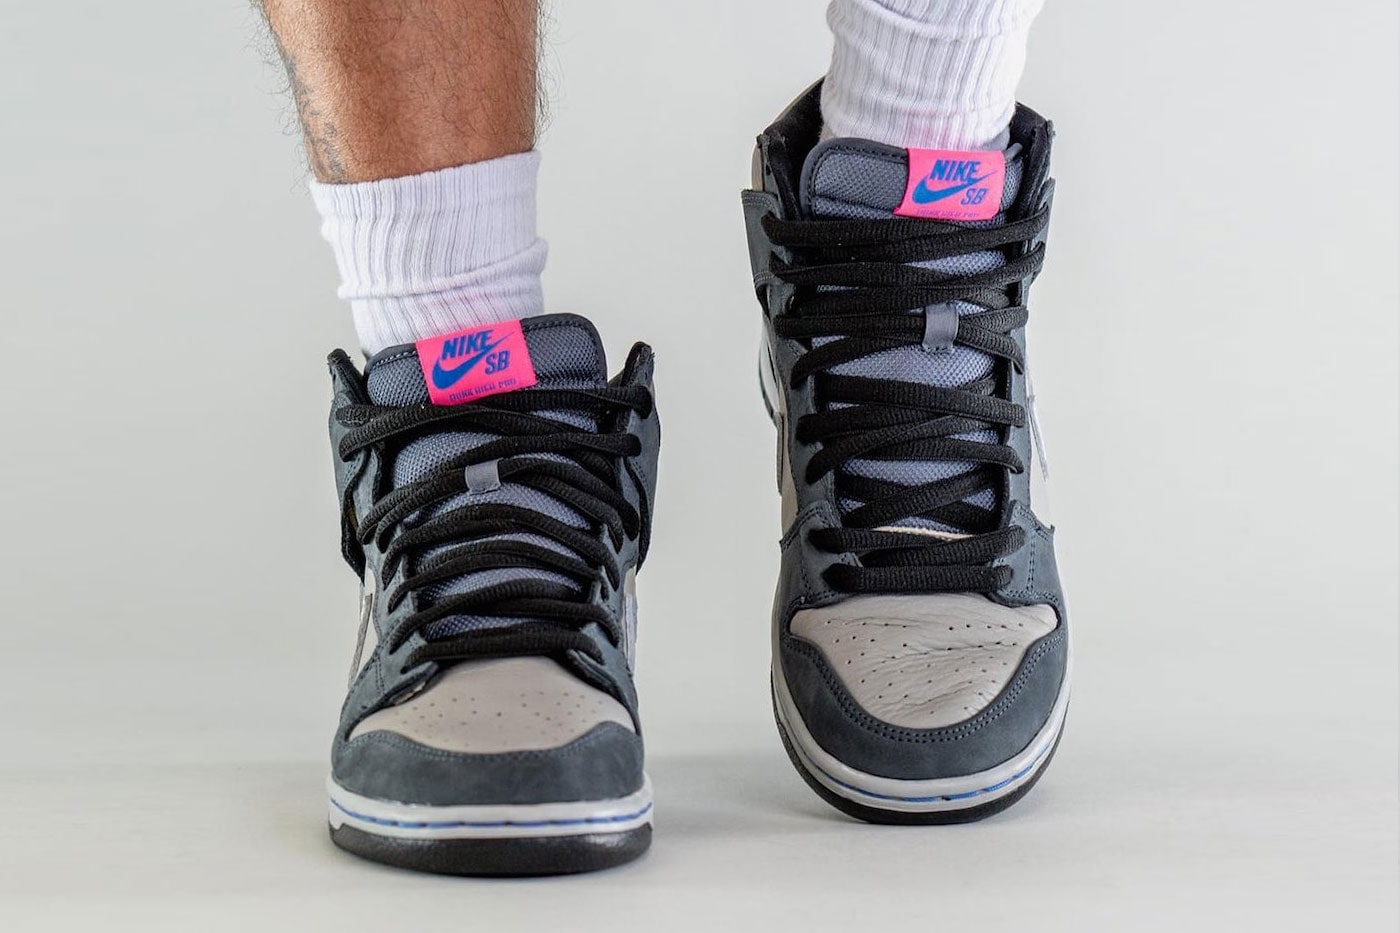 Nike SB Dunk High “Medium Gray” Official Look Footwear sneaker Swoosh leather mesh light gray medium gray white neon pink dj9800-001